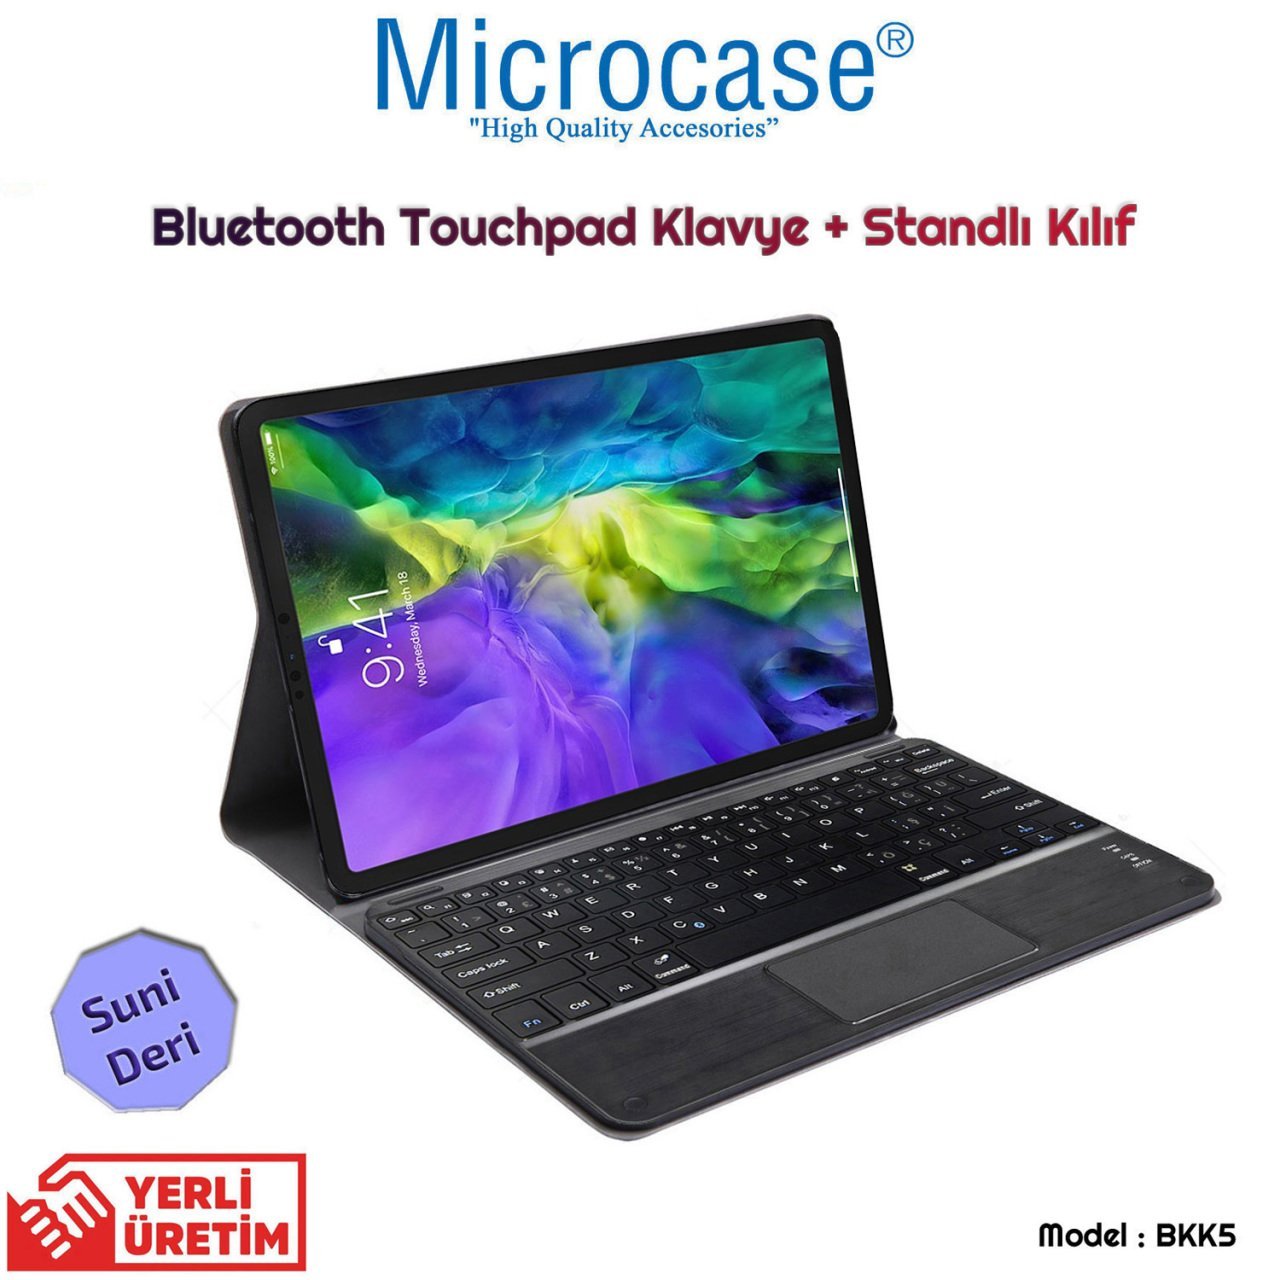 Microcase iPad Pro 11 2020 Bluetooth Touchpad Klavye + Standlı Kılıf - BKK5